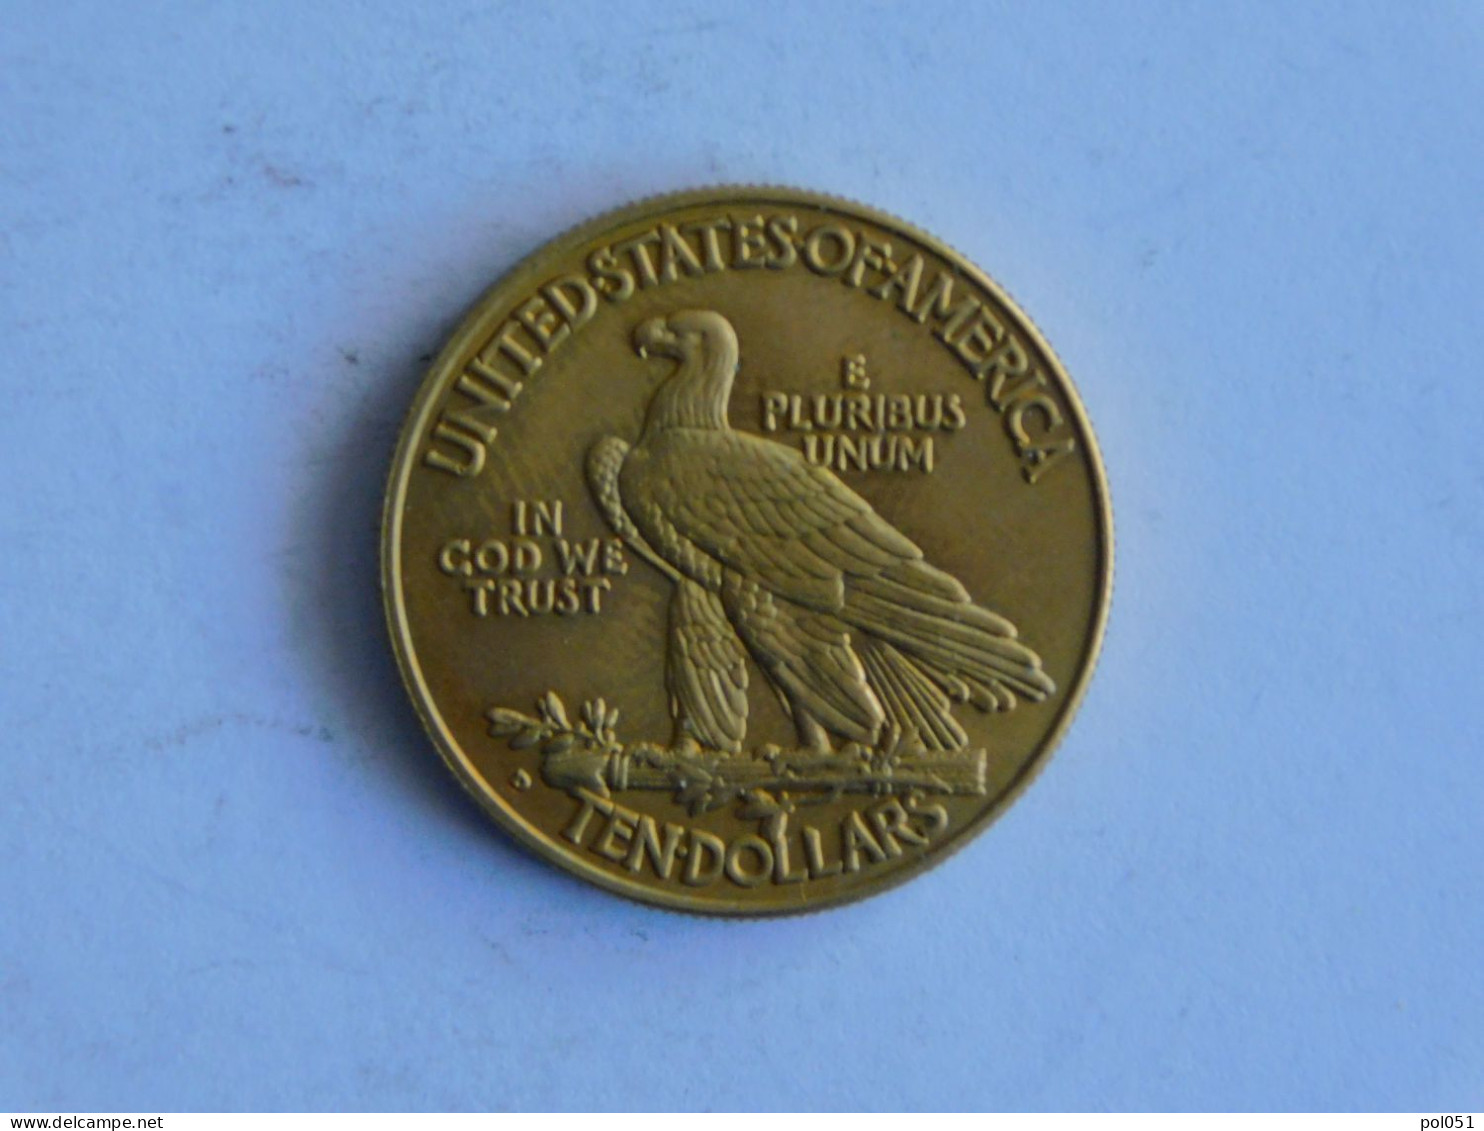 USA 10 TEN DOLLAR 1911 D OR GOLD Dollars Copie Copy - 10$ - Eagle - 1907-1933: Indian Head